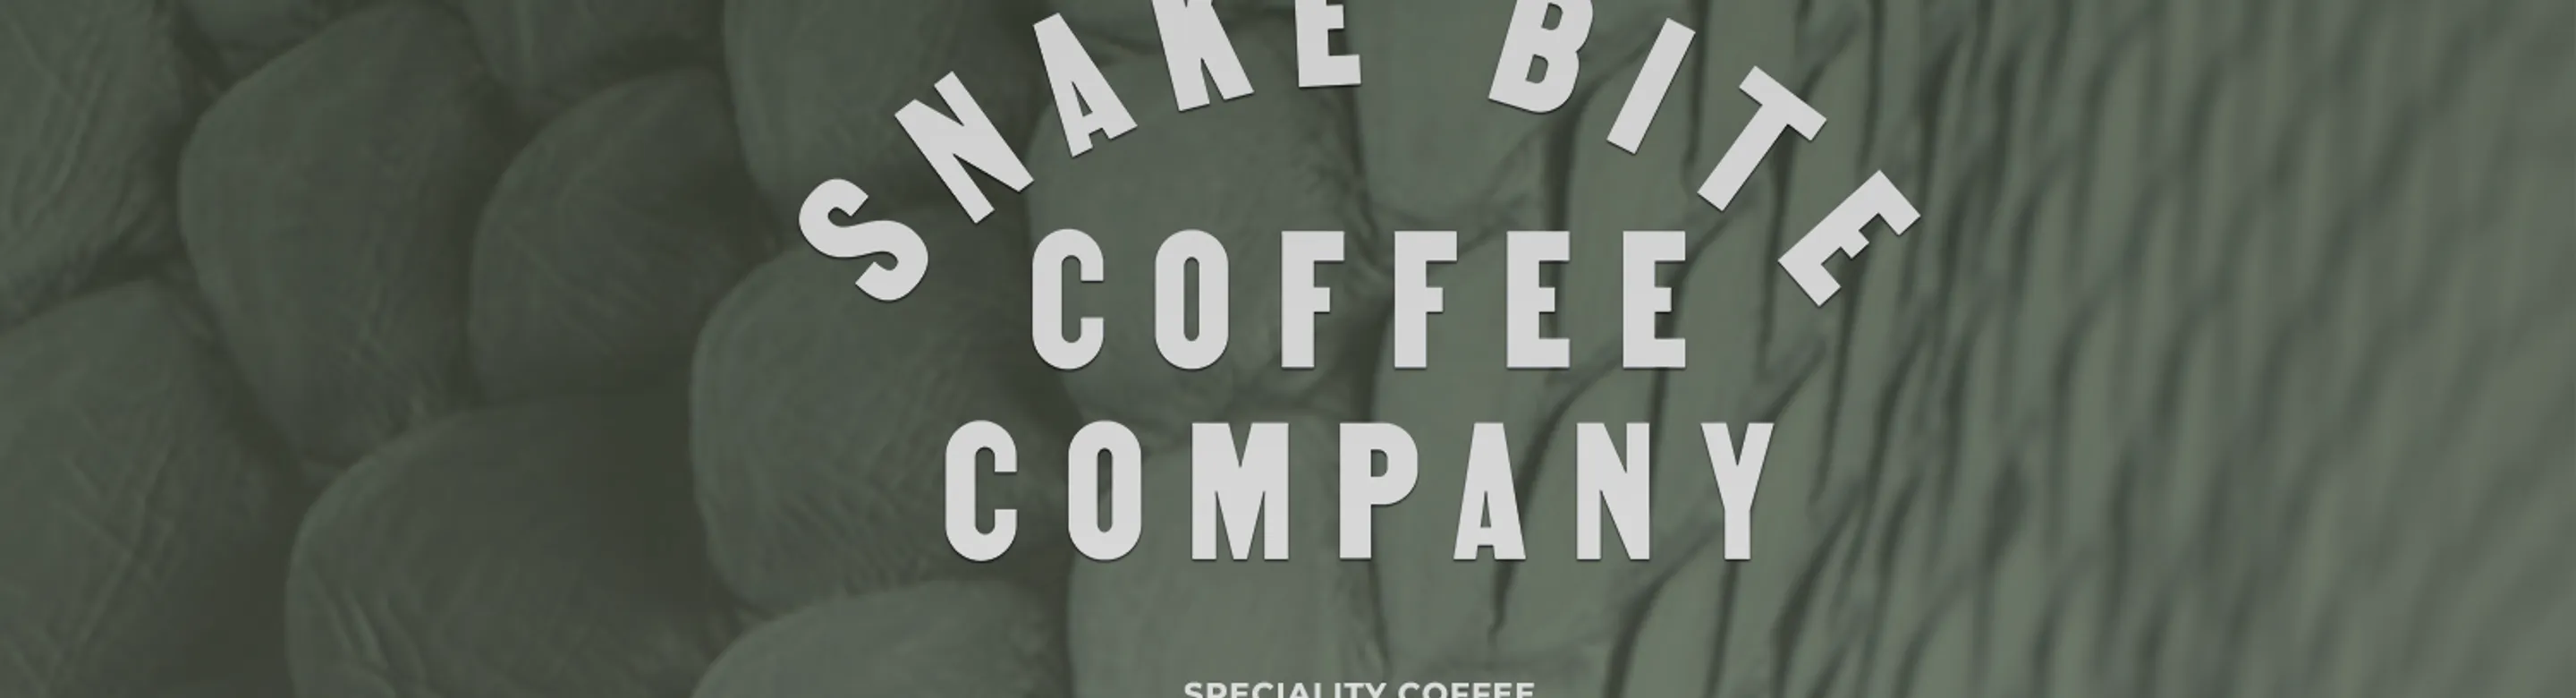 Snakebite Coffee Co